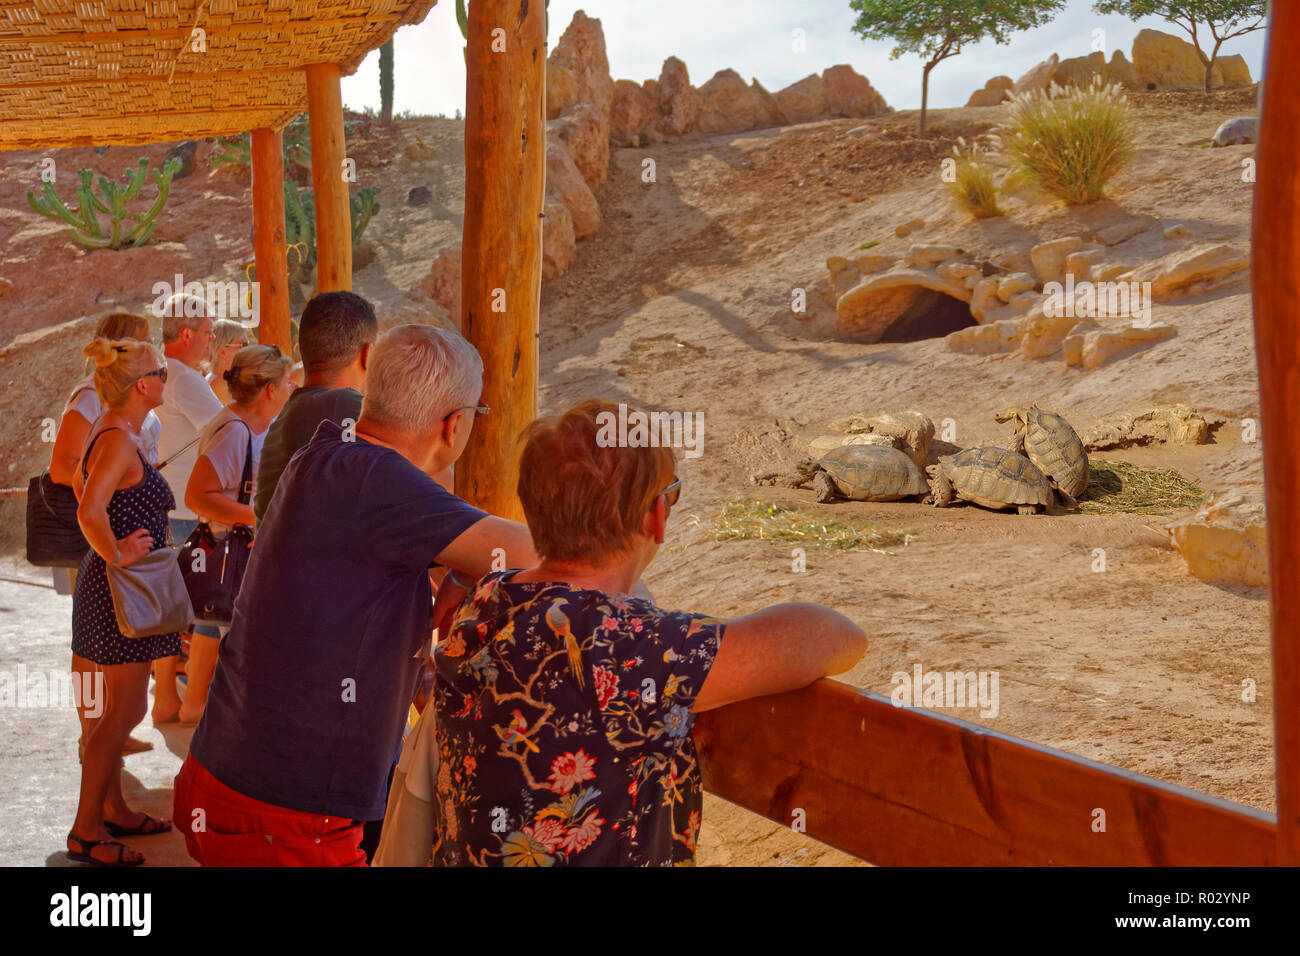 African Spurred Tortoise enclosure at Croco Park wildlife theme park, Agadir, Souss-Massa Province, Morocco. Stock Photo